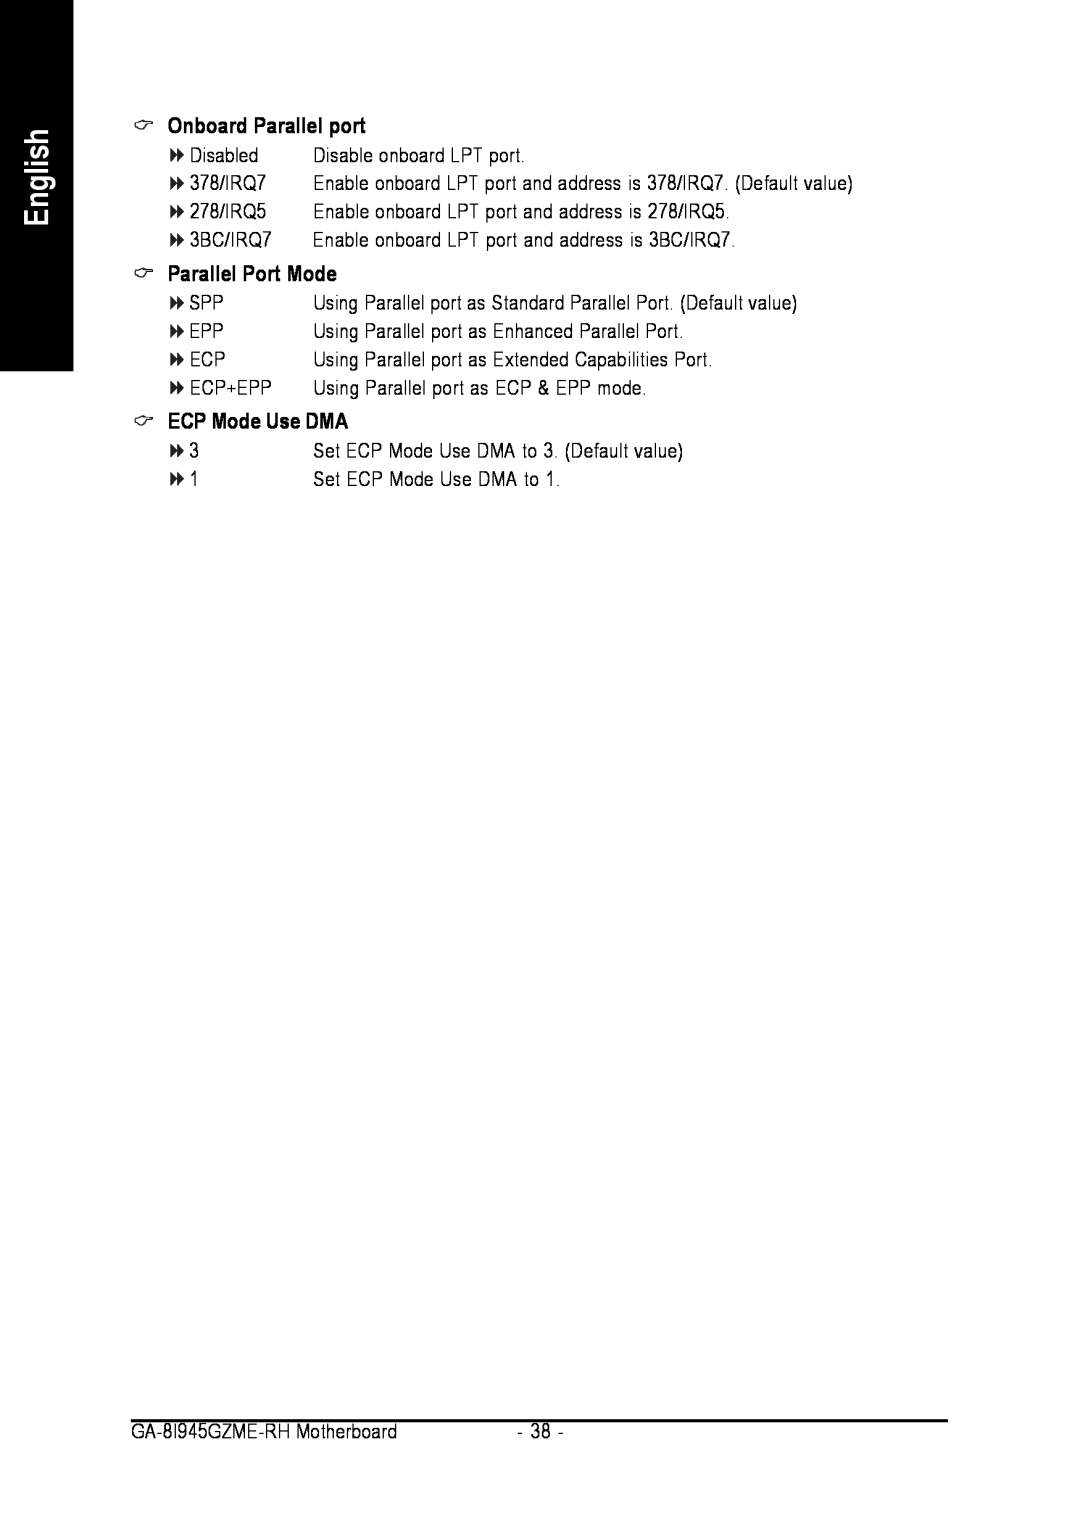 Intel GA-8I945GZME-RH user manual Onboard Parallel port, Parallel Port Mode, ECP Mode Use DMA, English 